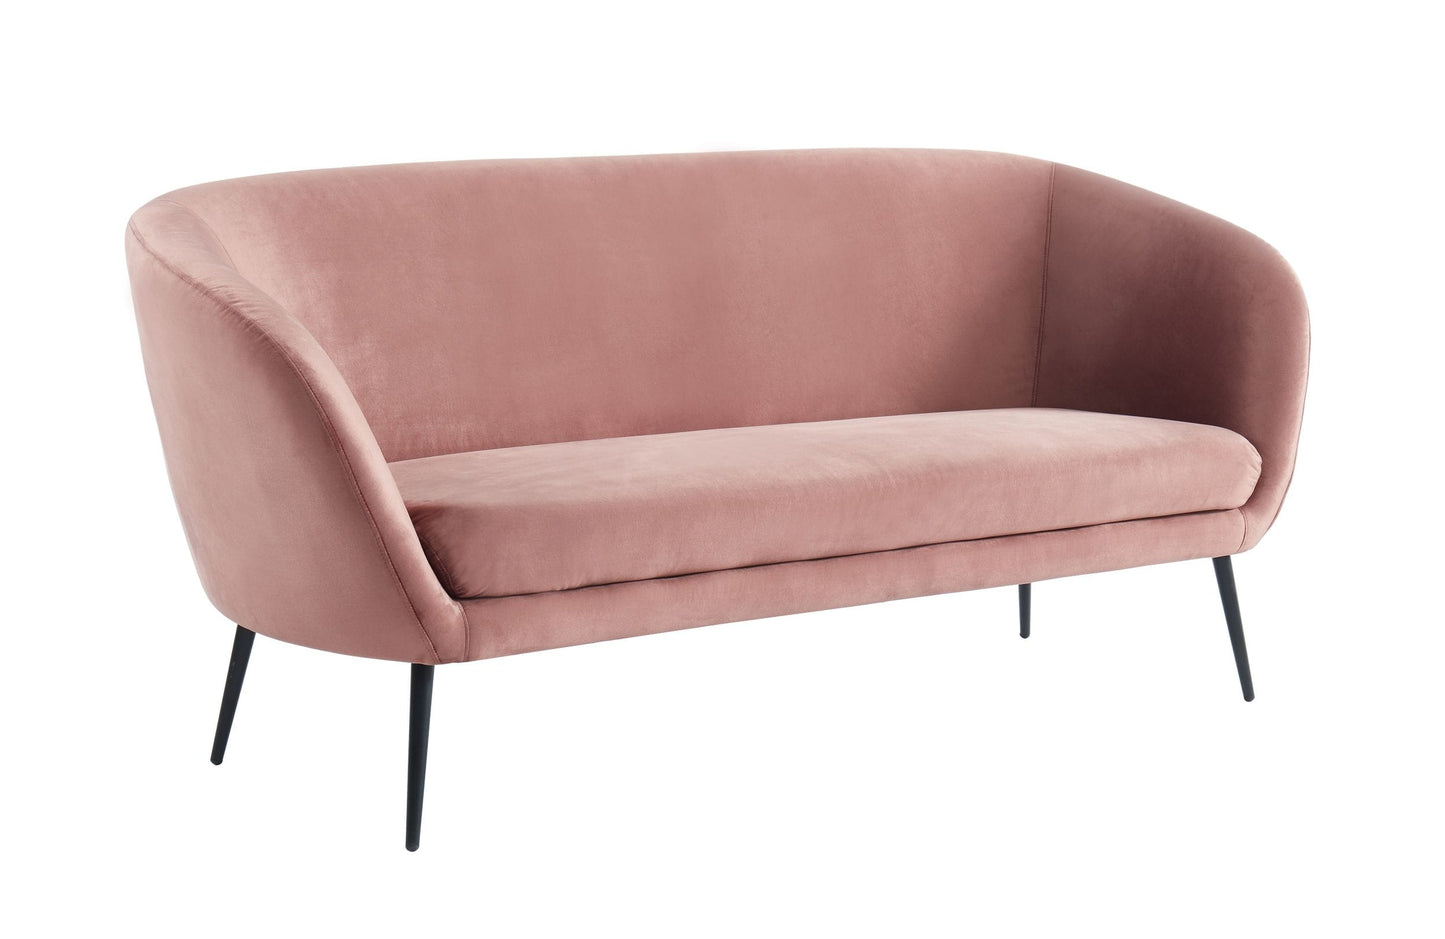 Divani Casa Koeing - Modern Coral Fabric Sofa